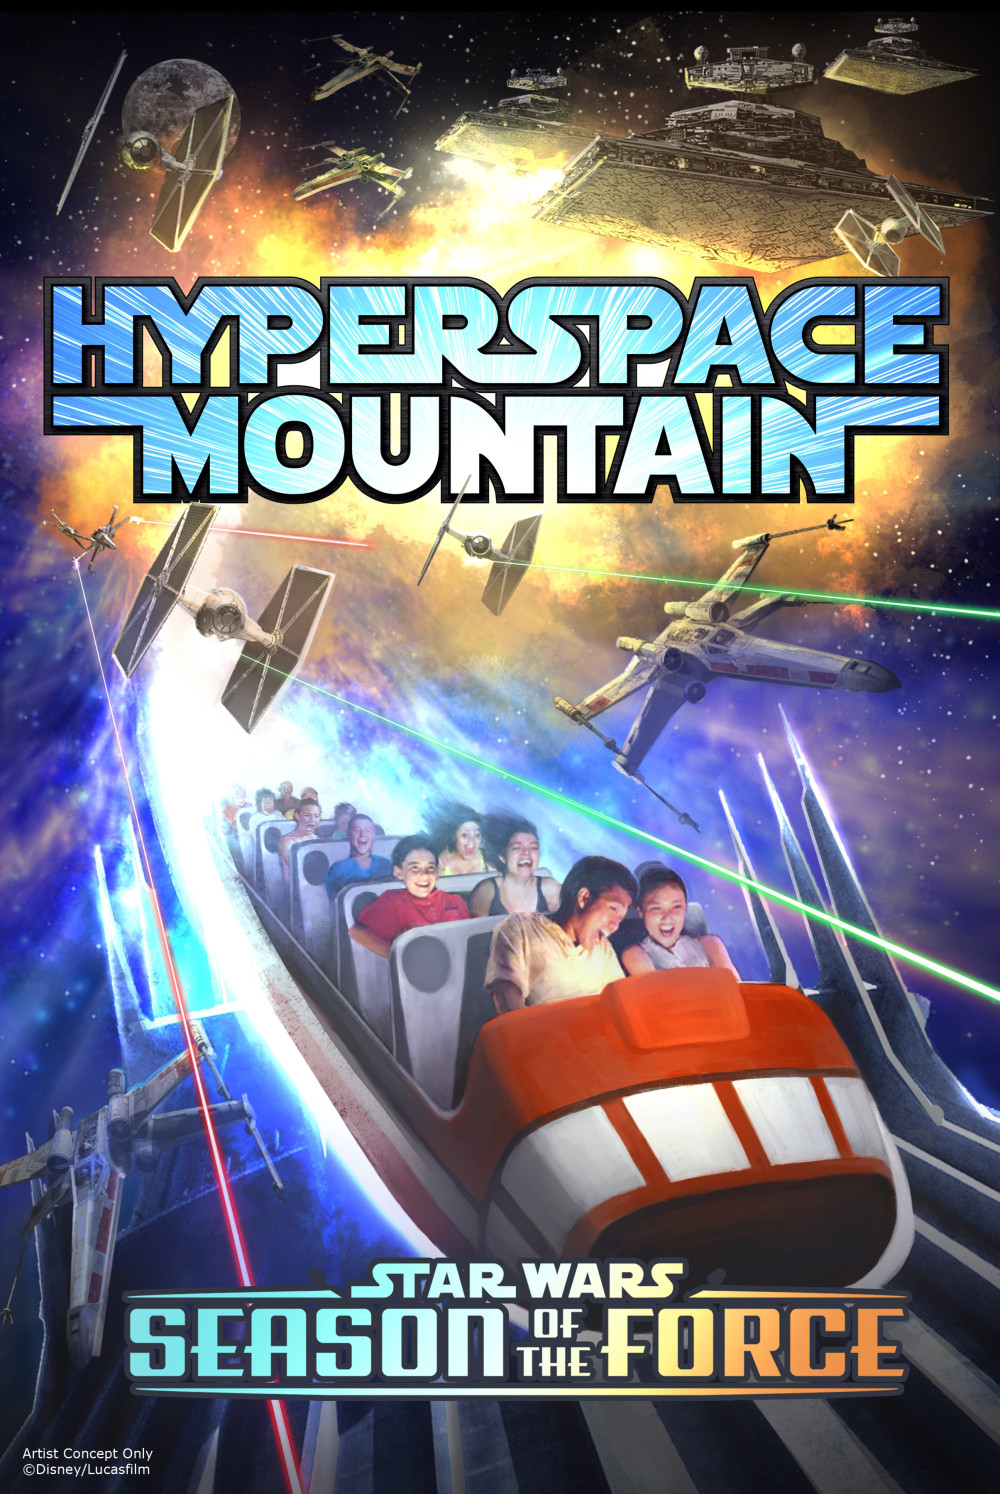 Affiche Star Wars Hyperspace Mountain 